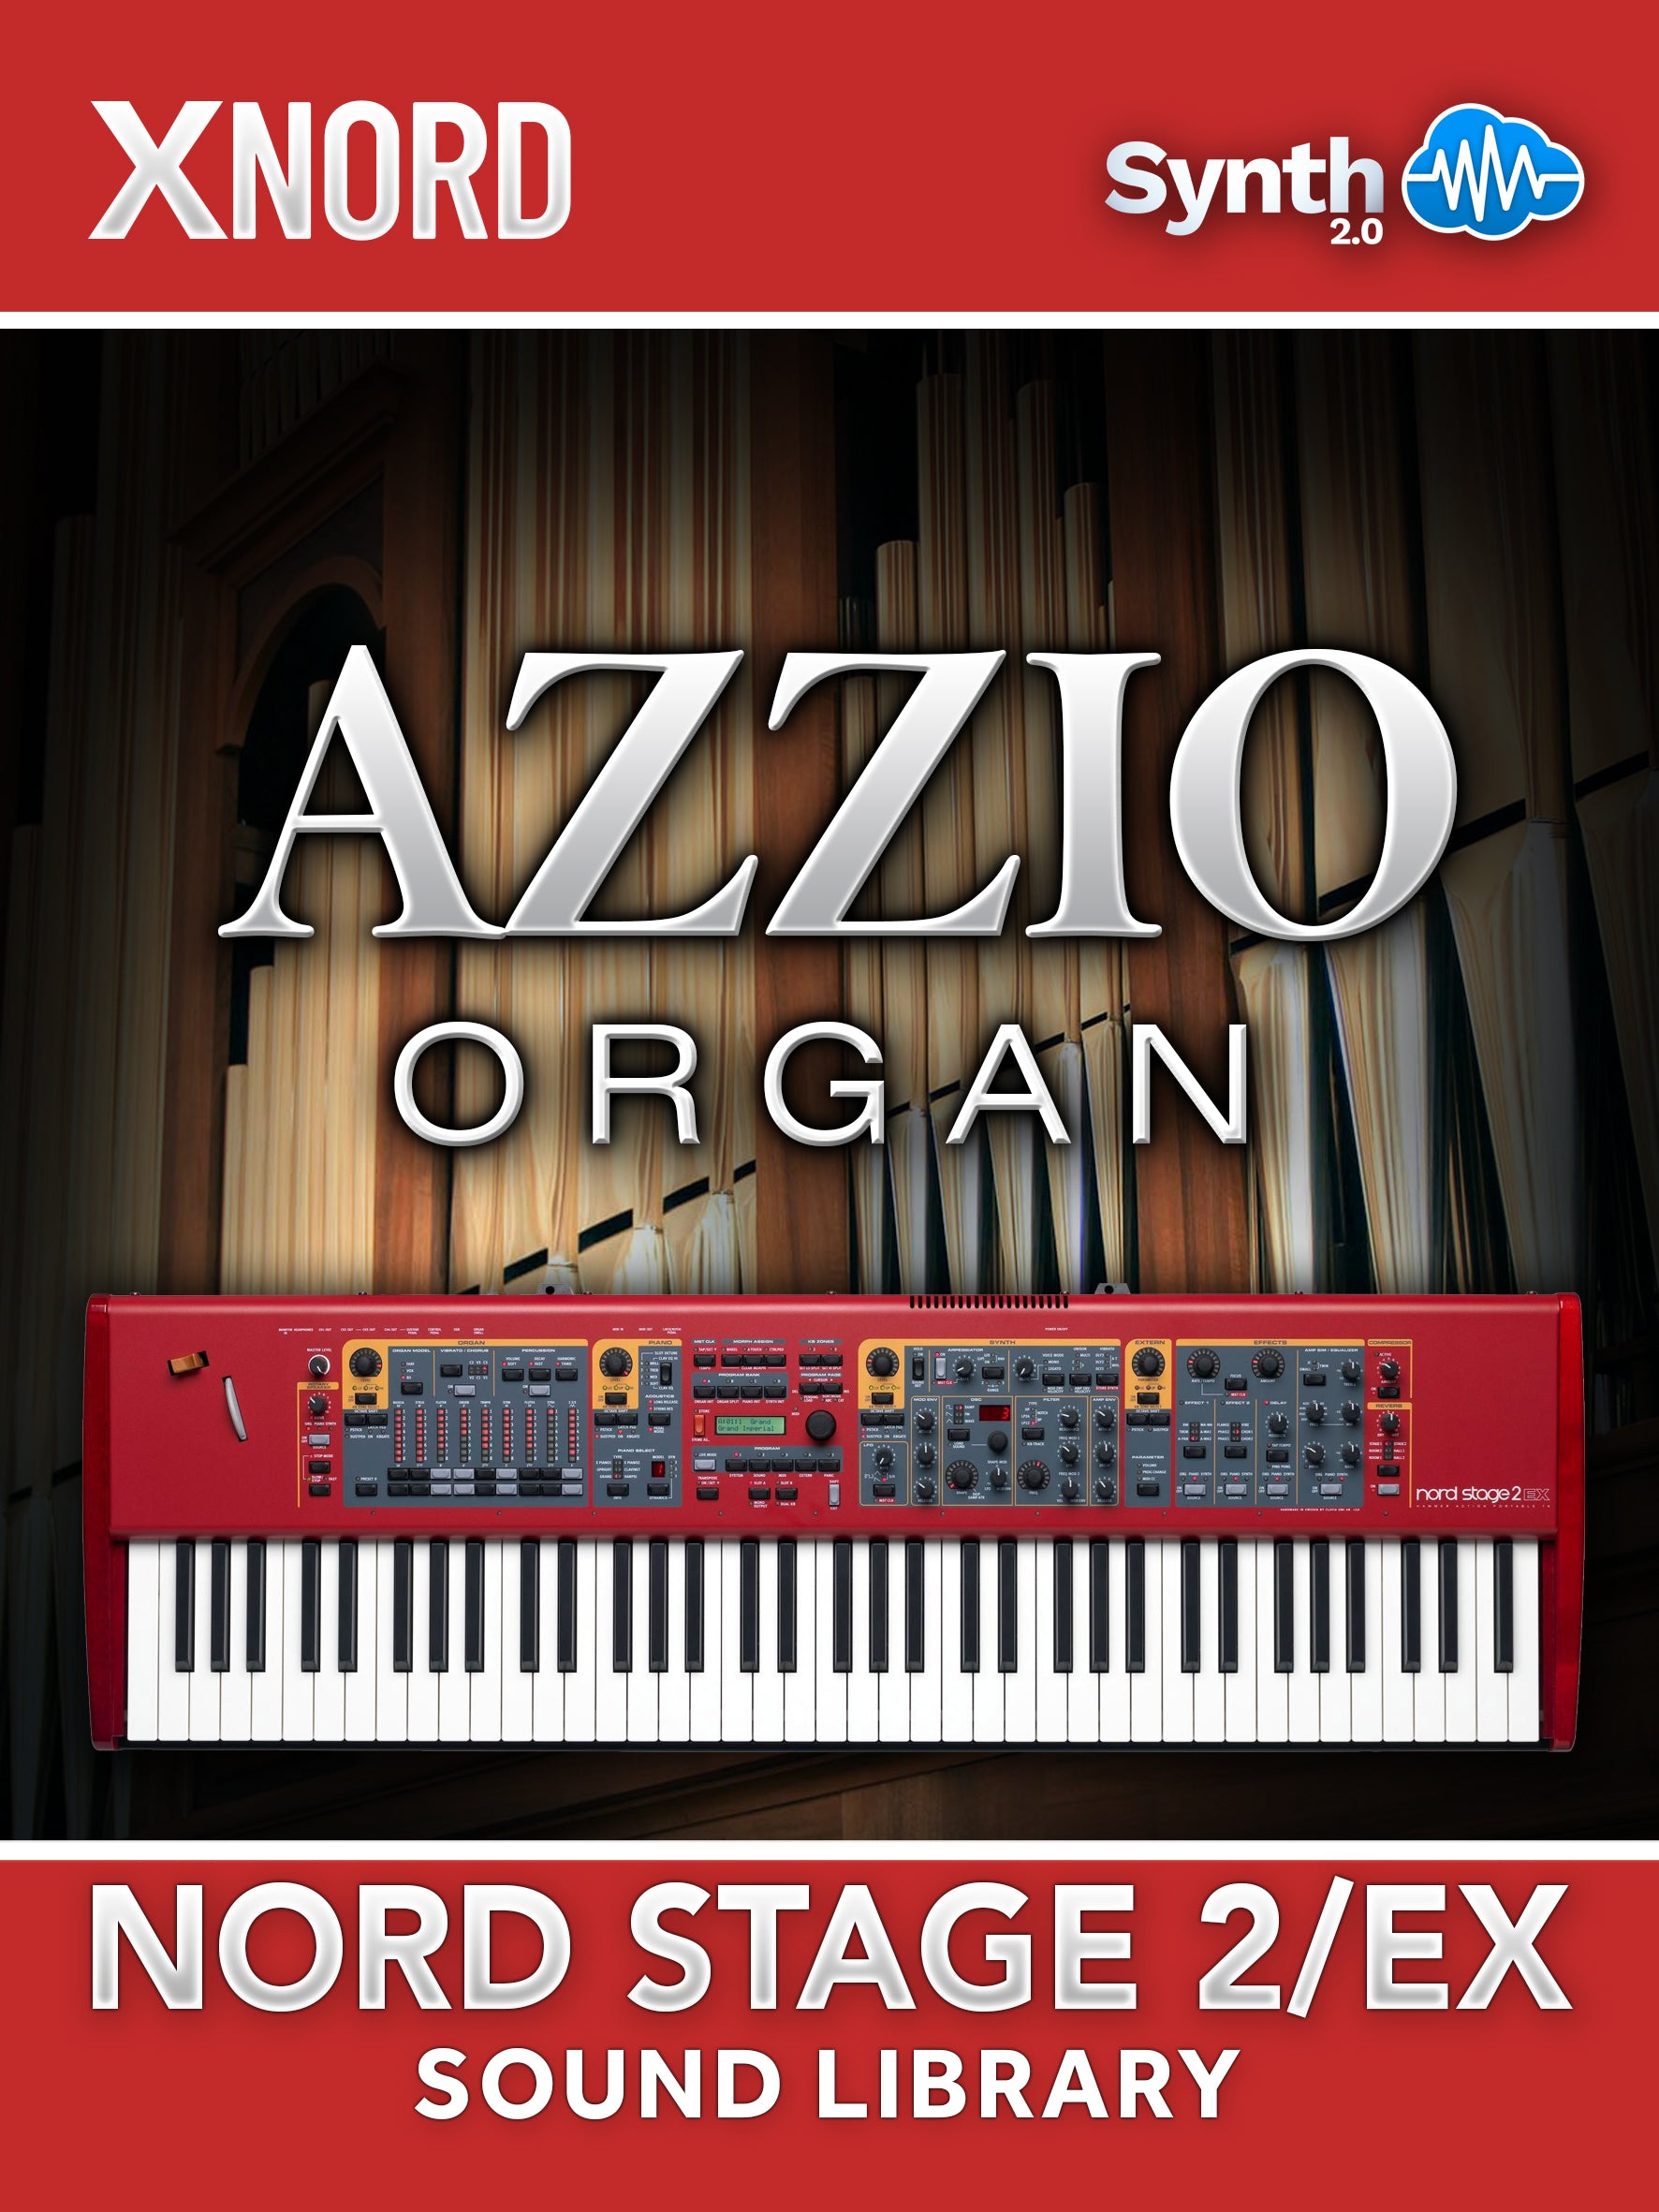 RCL010 - ( Bundle ) - Strassburg Organ + Azzio Organ - Nord Stage 2 / 2 EX